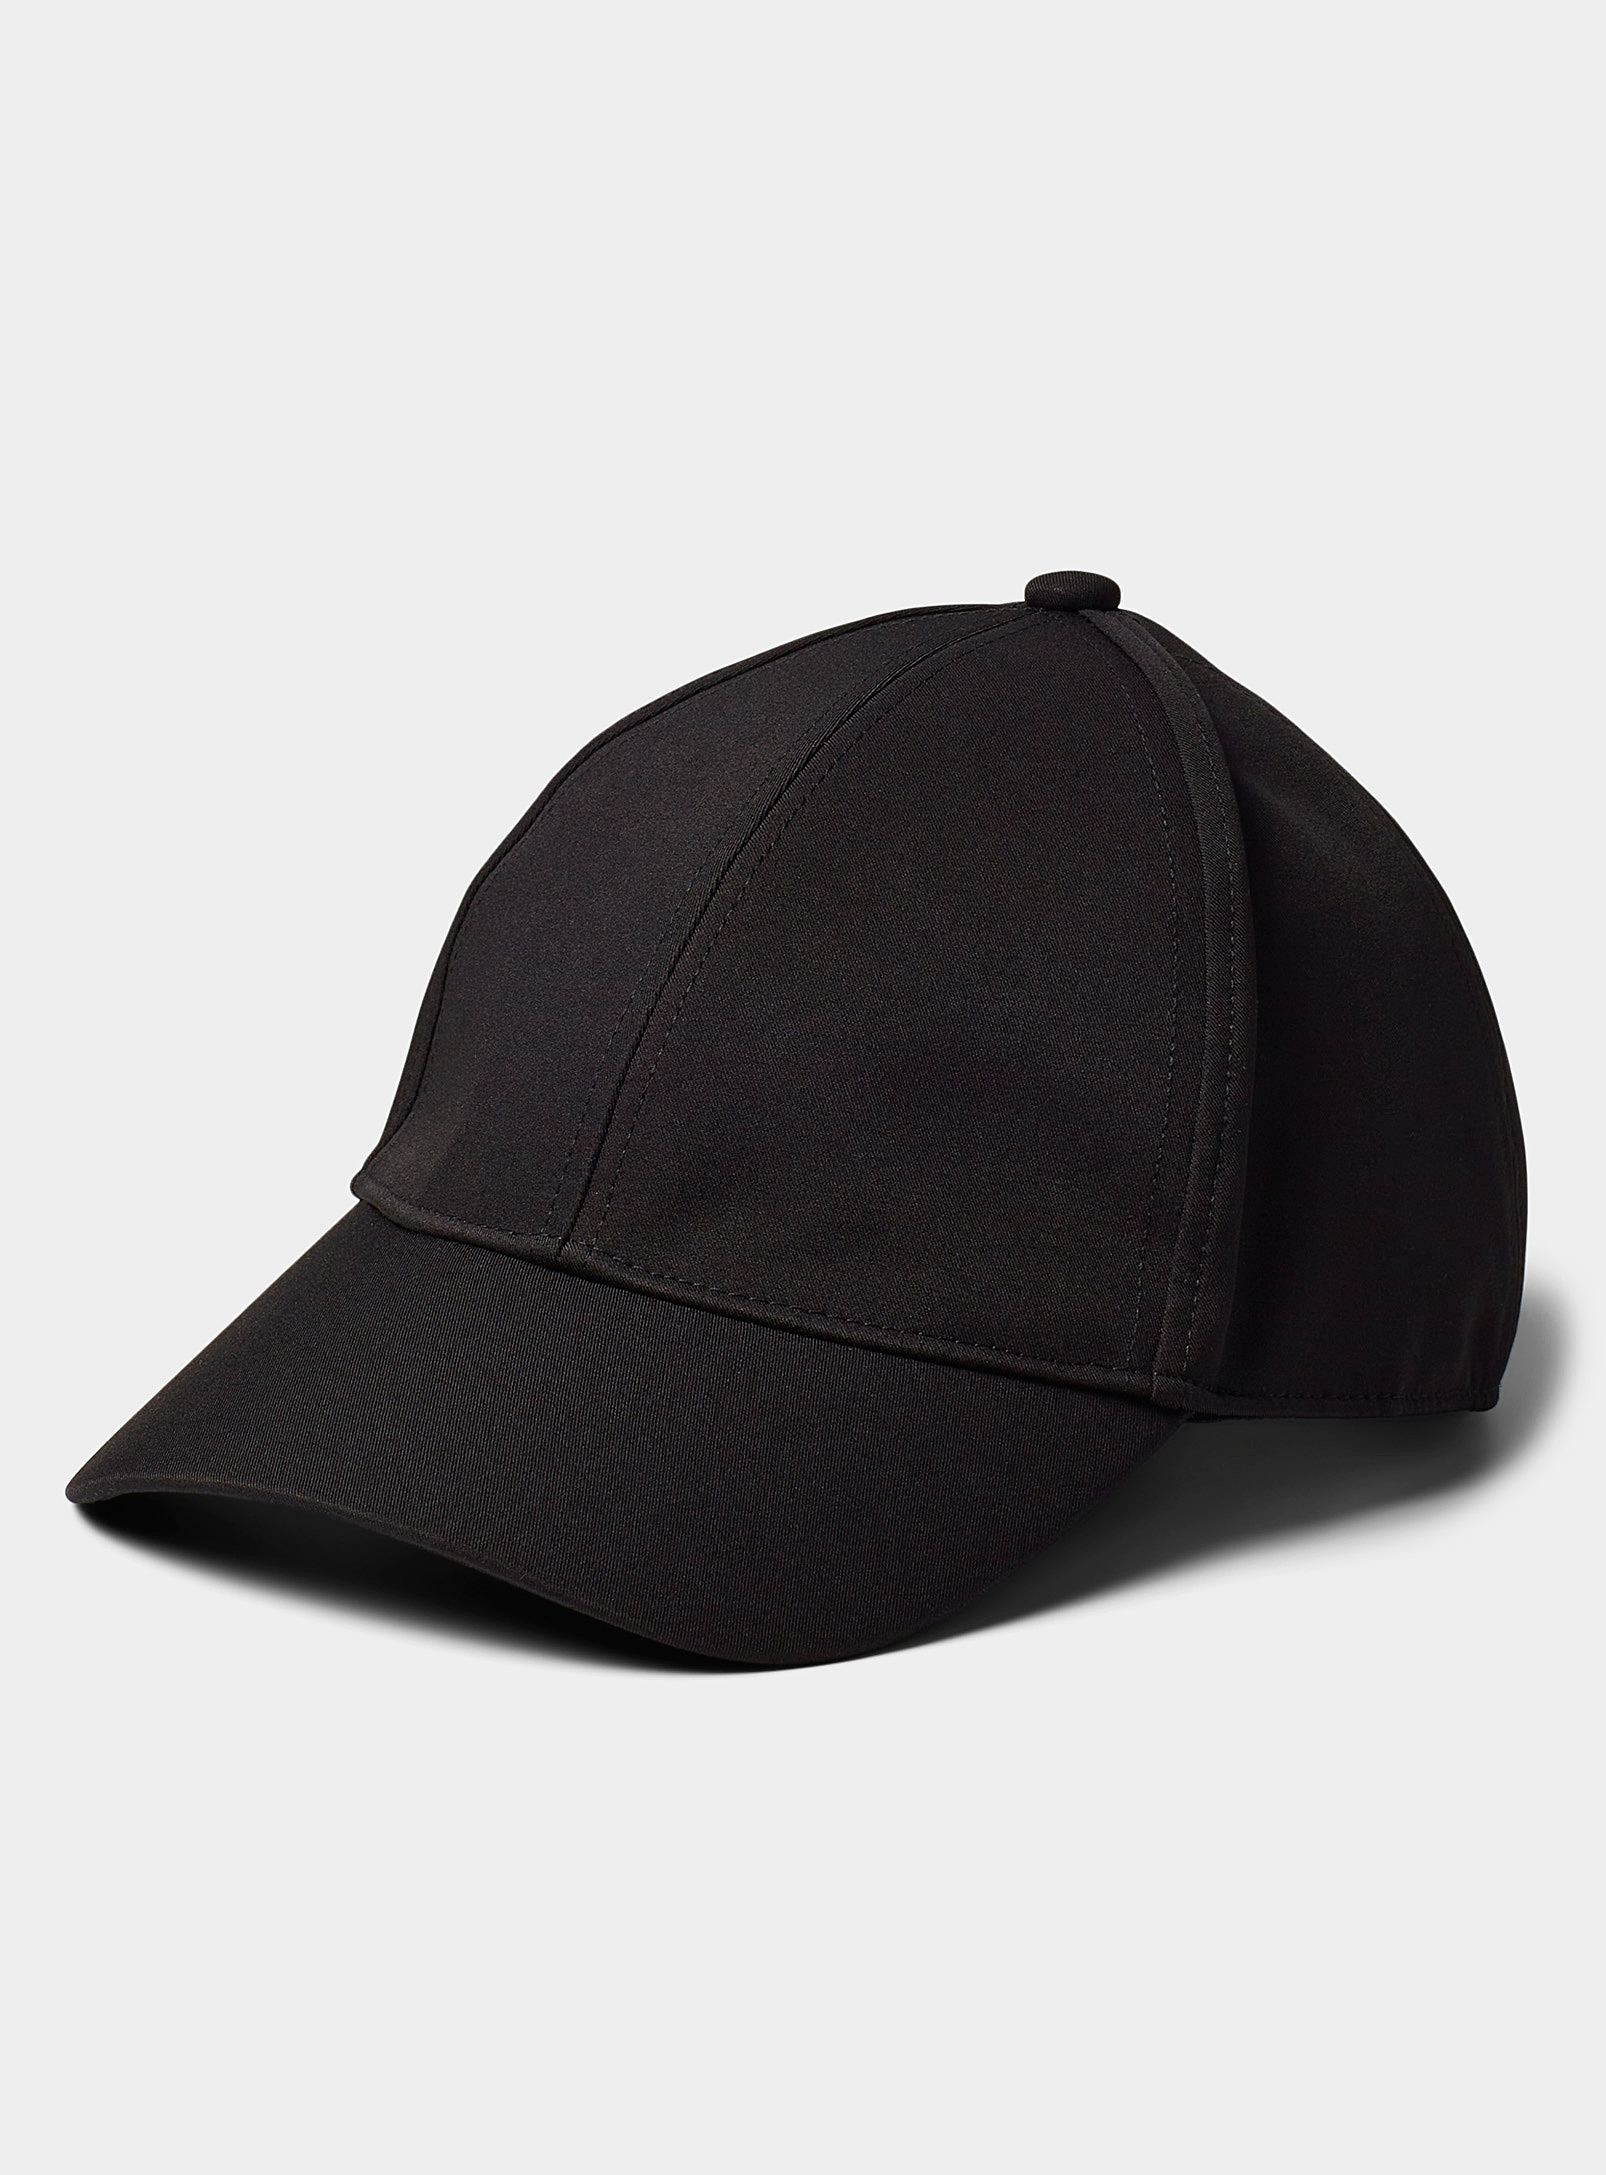 Simons - Women's Monochrome baseball cap